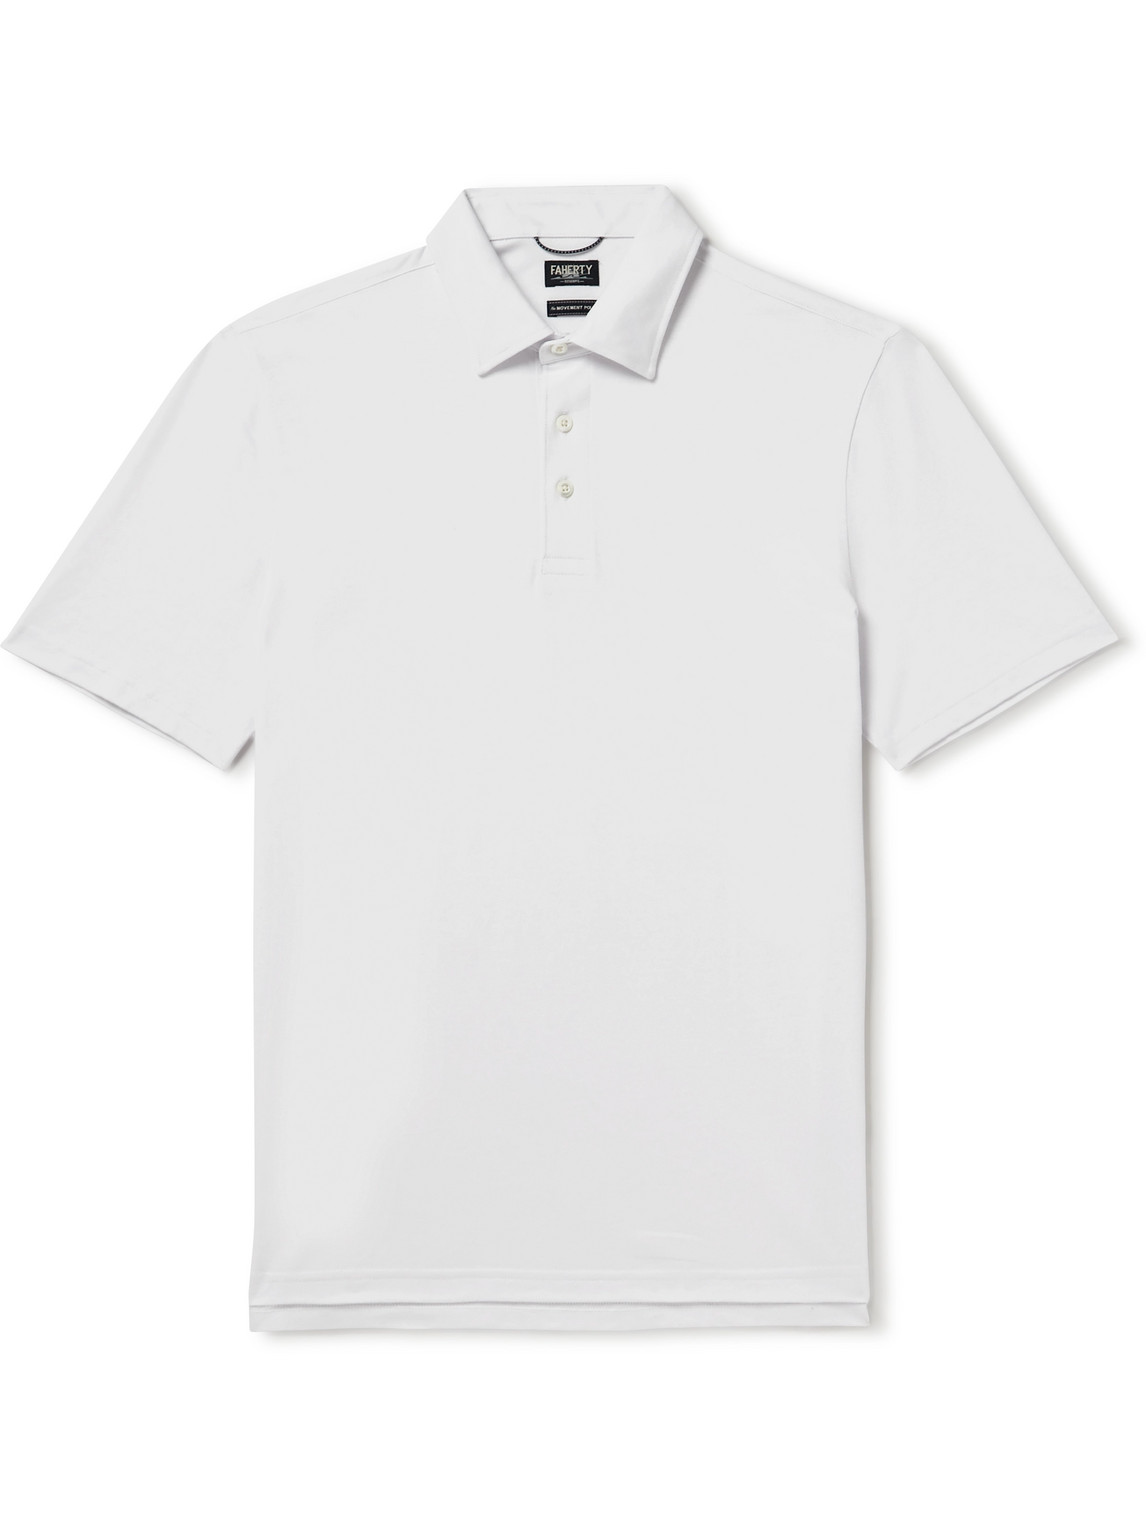 Faherty - Movement Pima Cotton-Blend Piqué Polo Shirt - Men - White - M von Faherty